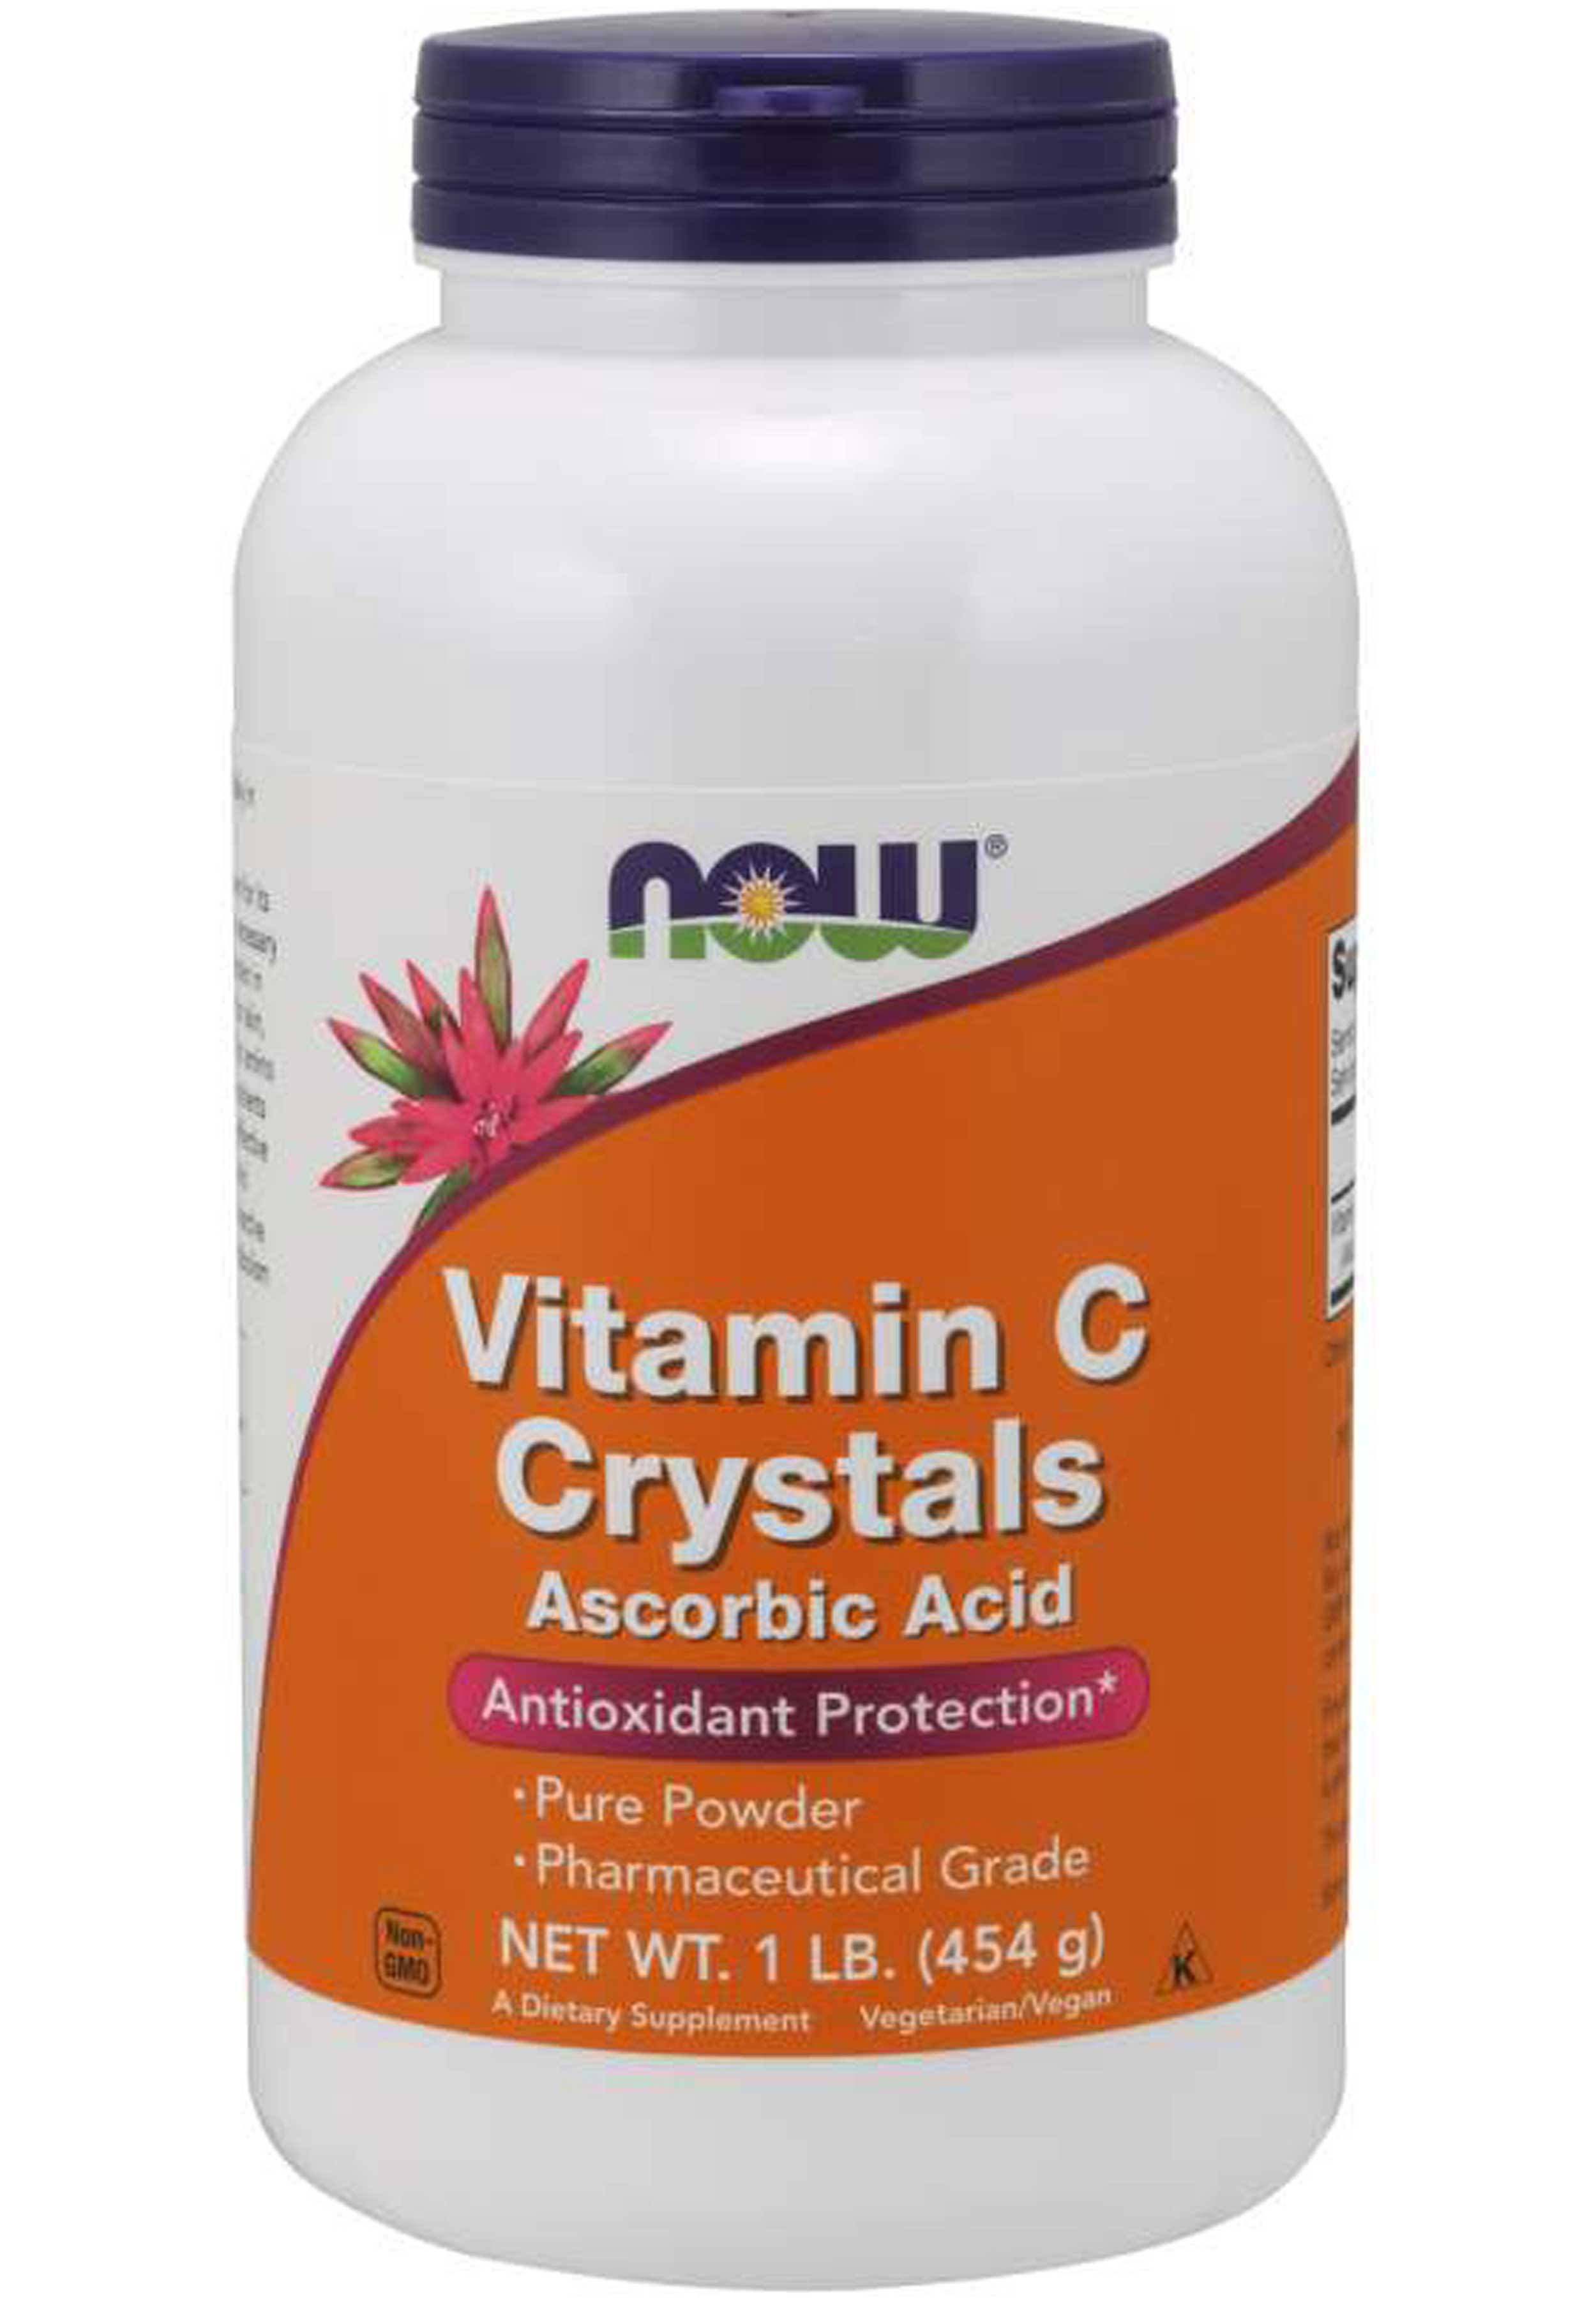 Now Foods Vitamin C Crystals - 454g